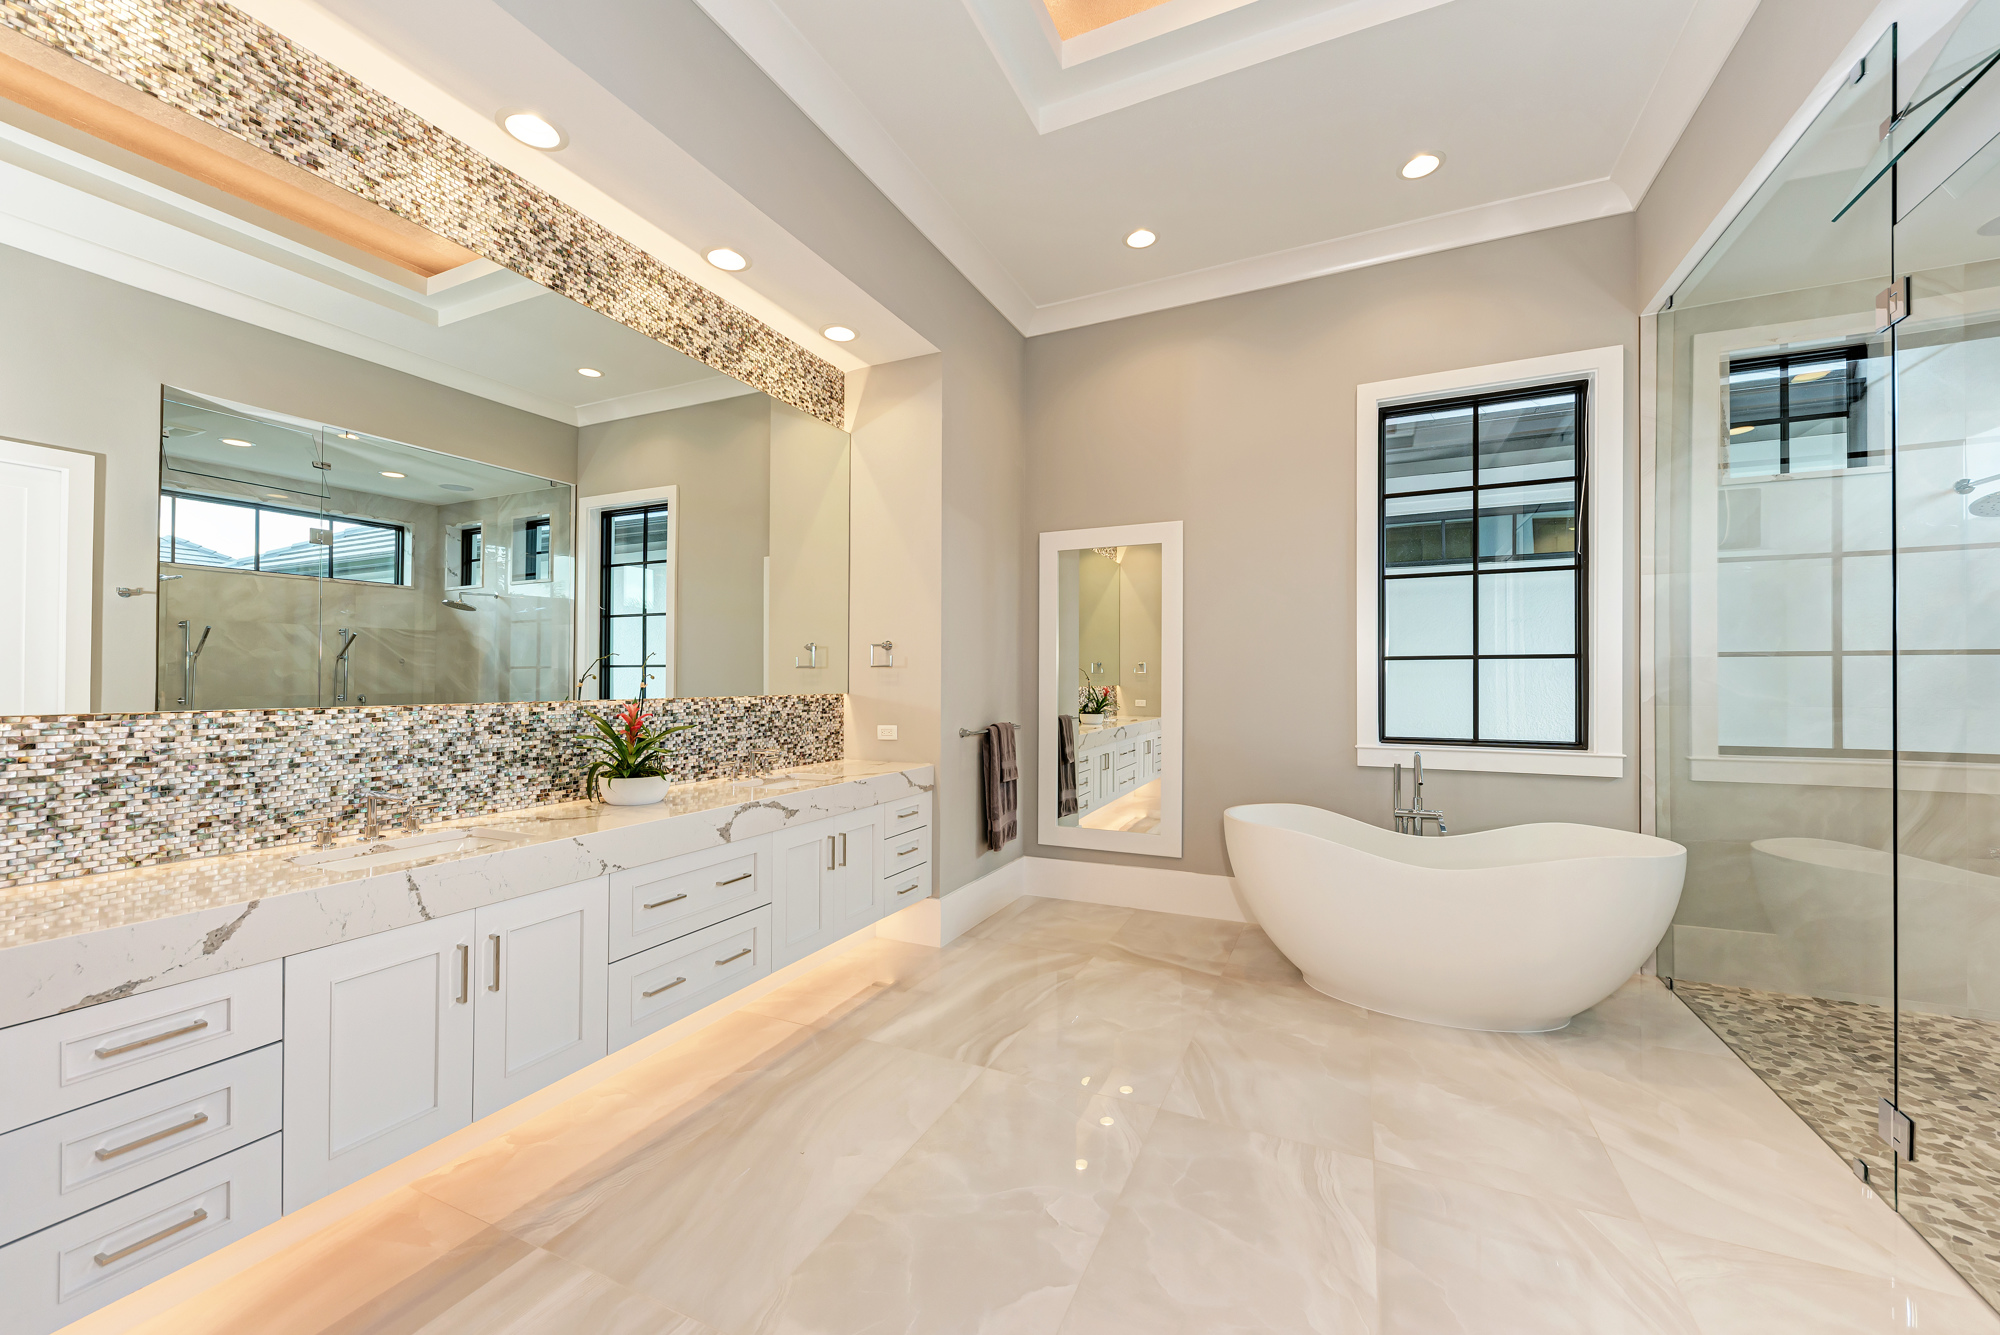 The spacious master bath features a modernistic soaking tub.